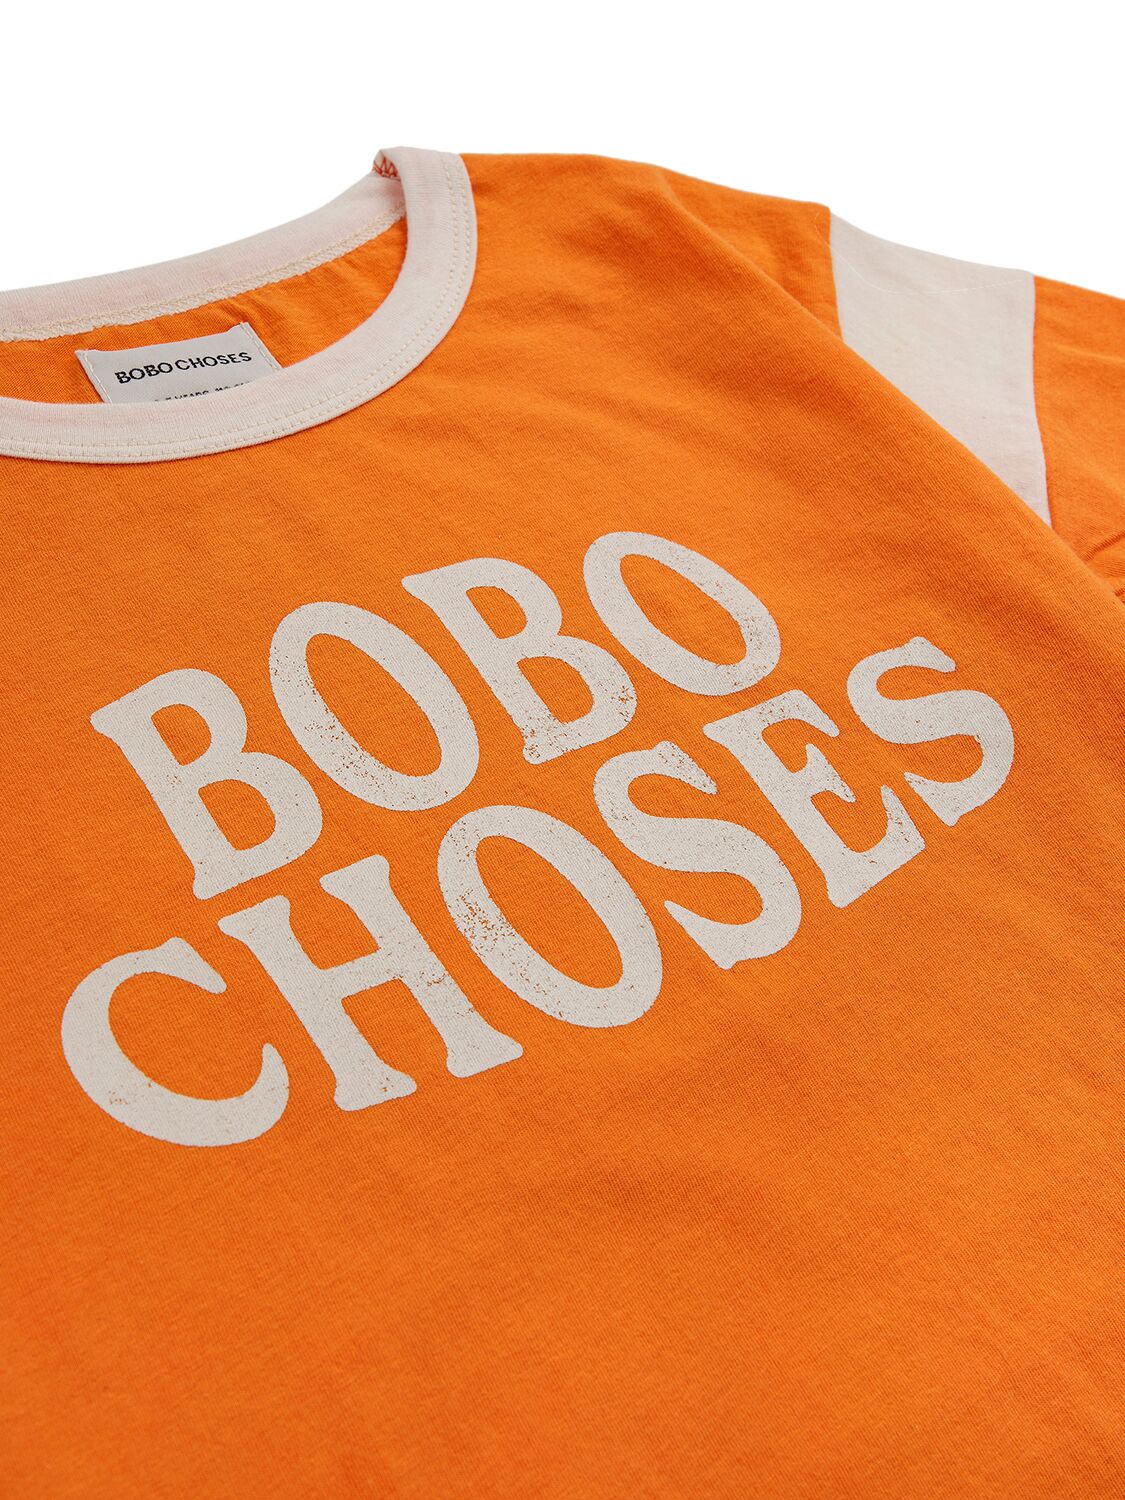 Shop Bobo Choses Printed Organic Cotton T-shirt In Orange